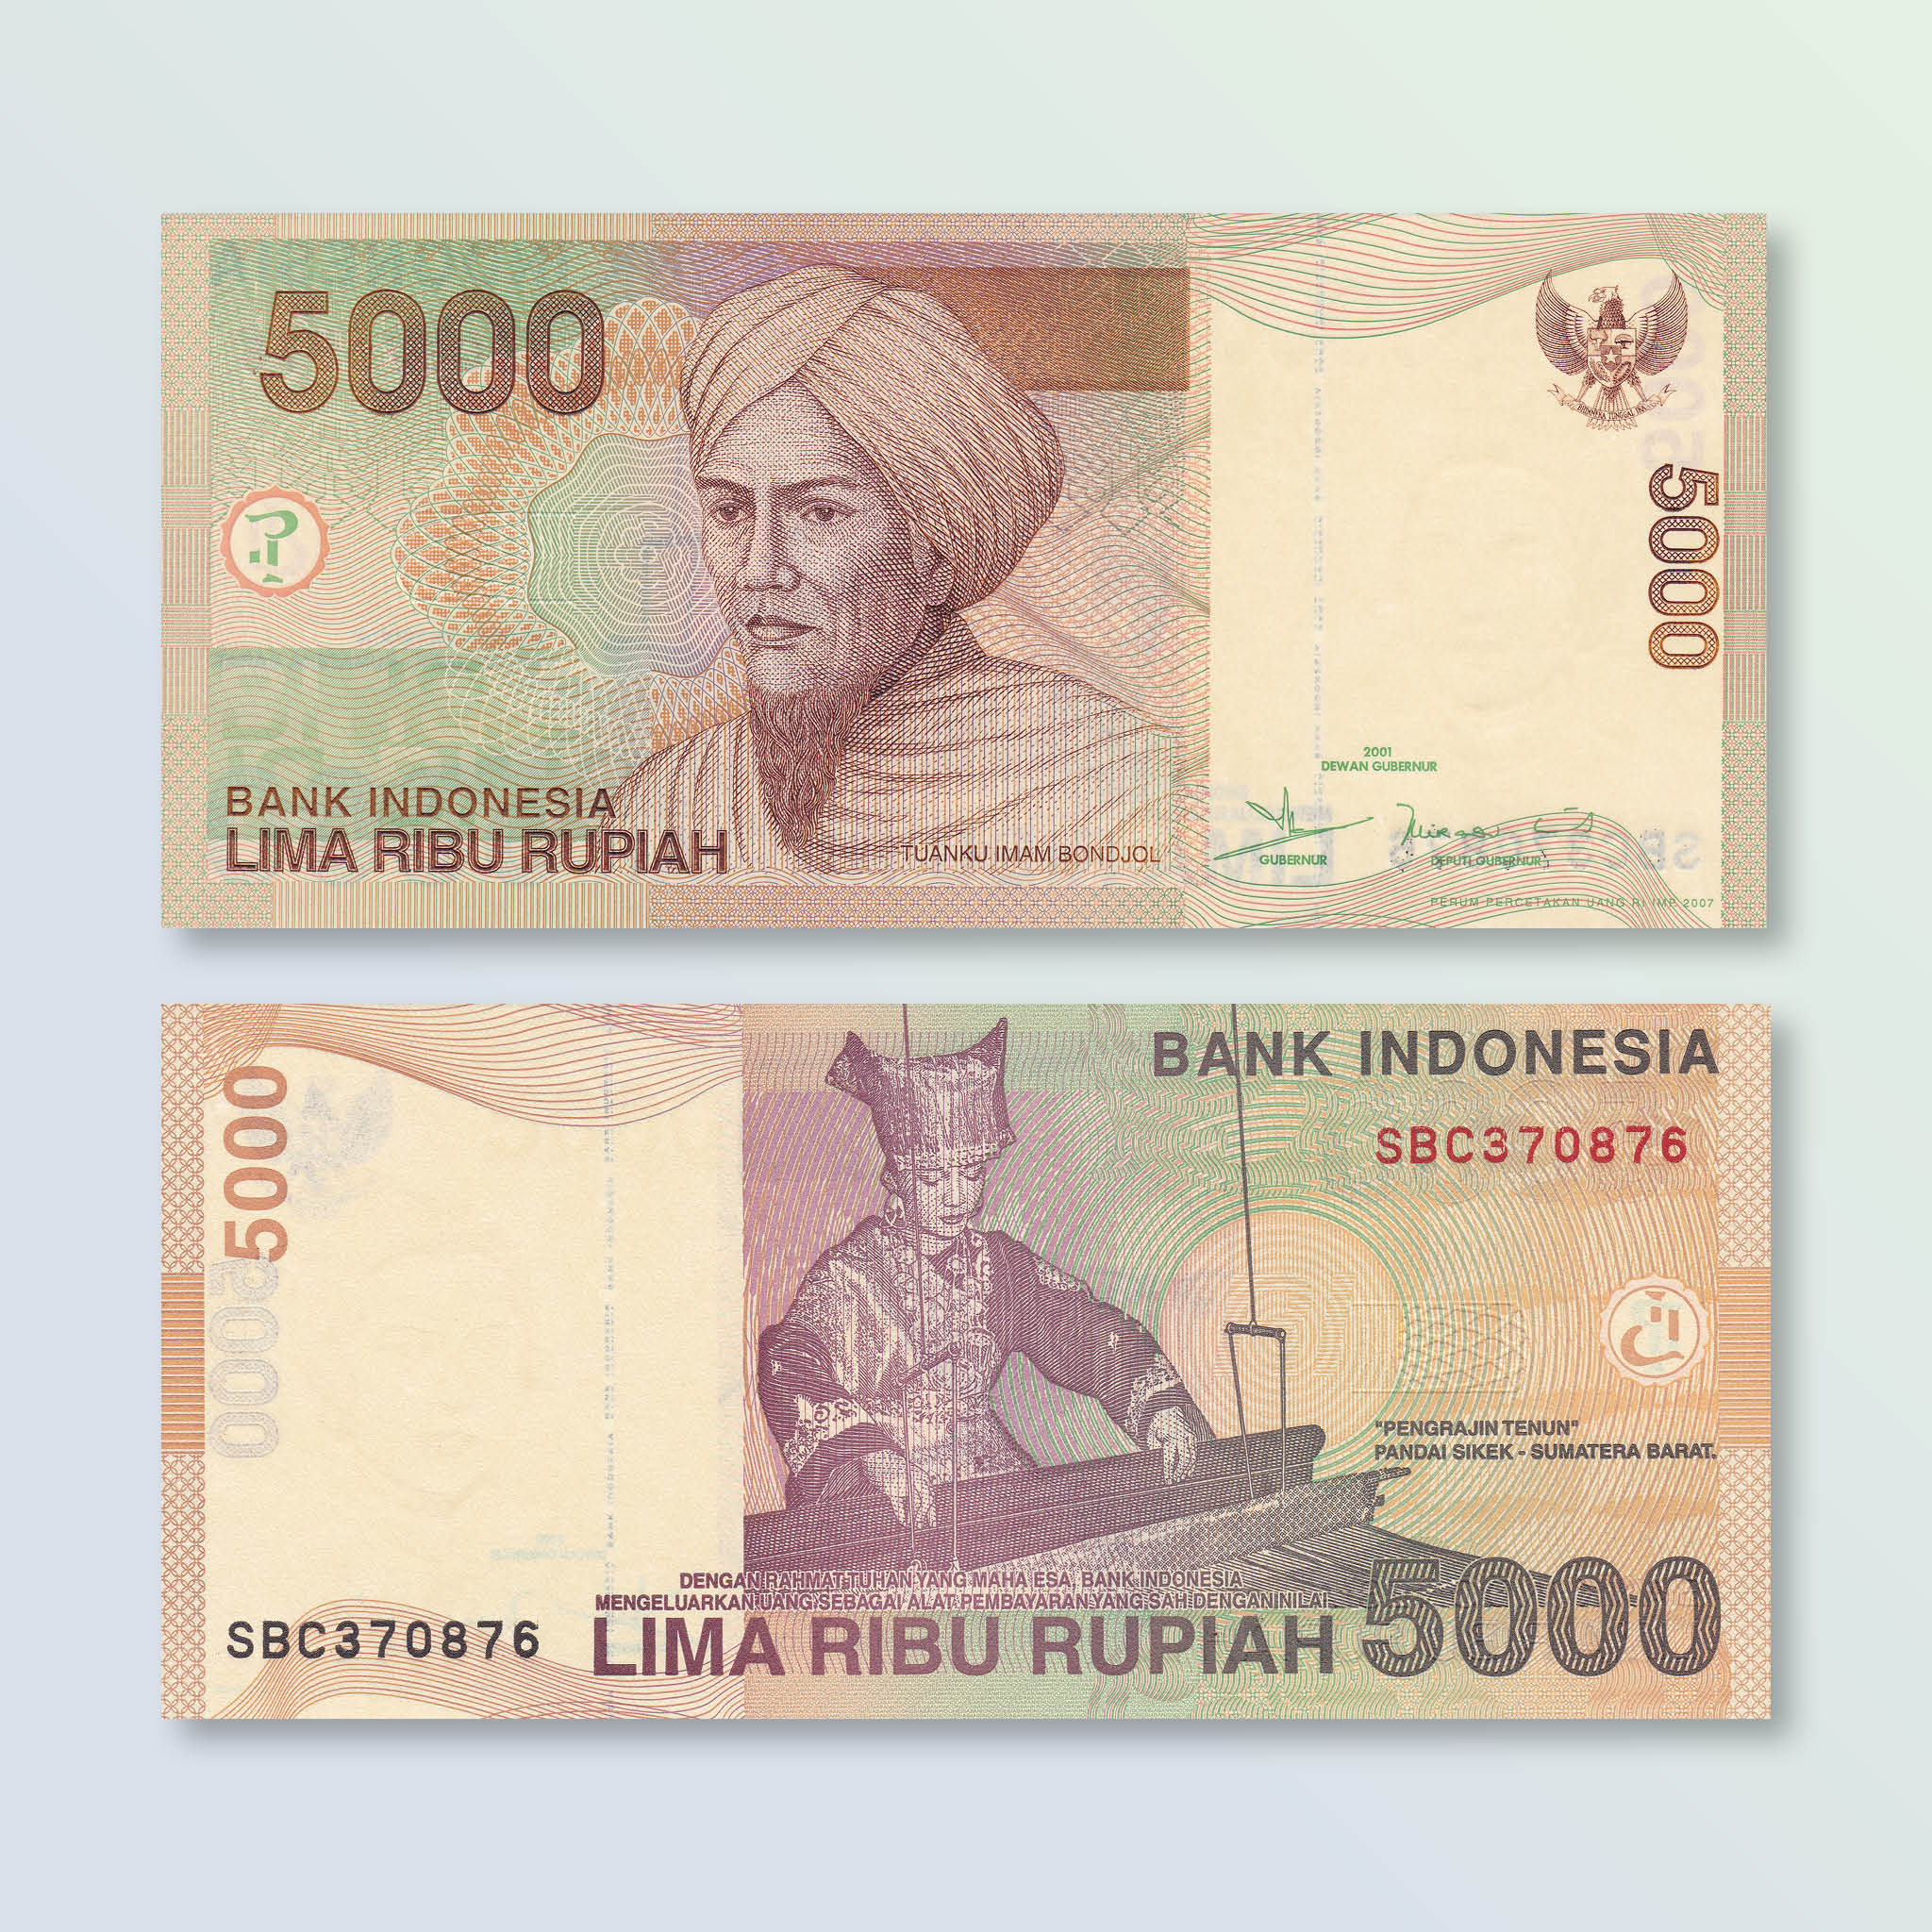 Indonesia 5000 Rupiah, 2001/2007, B599g, P142g, UNC - Robert's World Money - World Banknotes